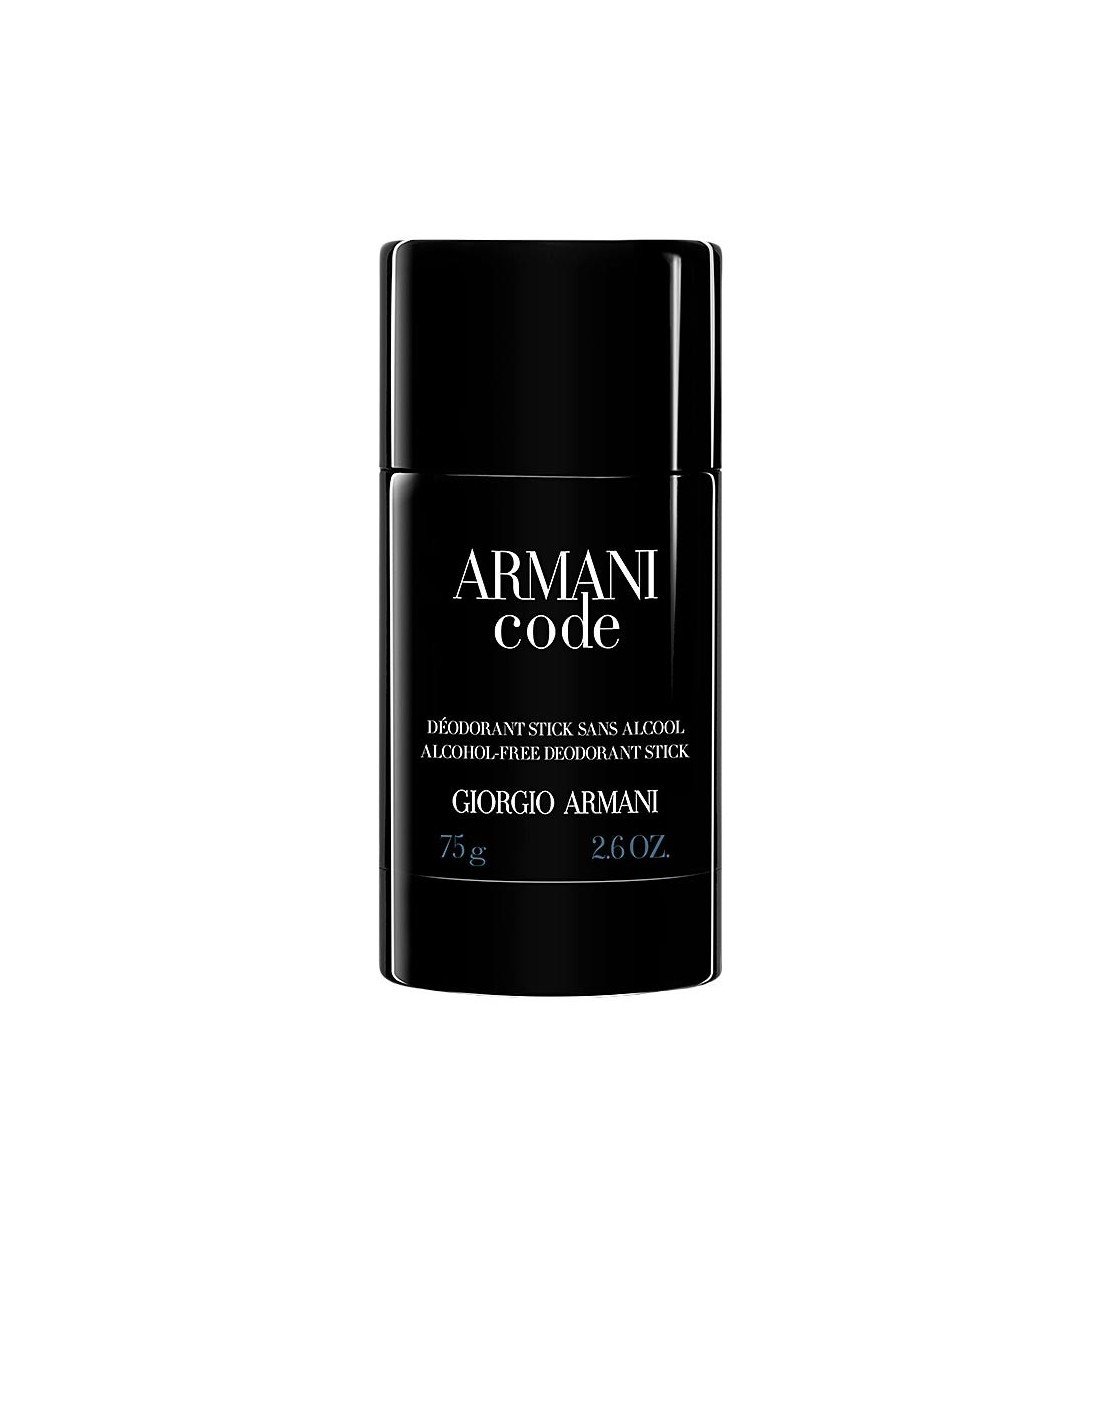 Shop now Armani Code Deodorant Stick 